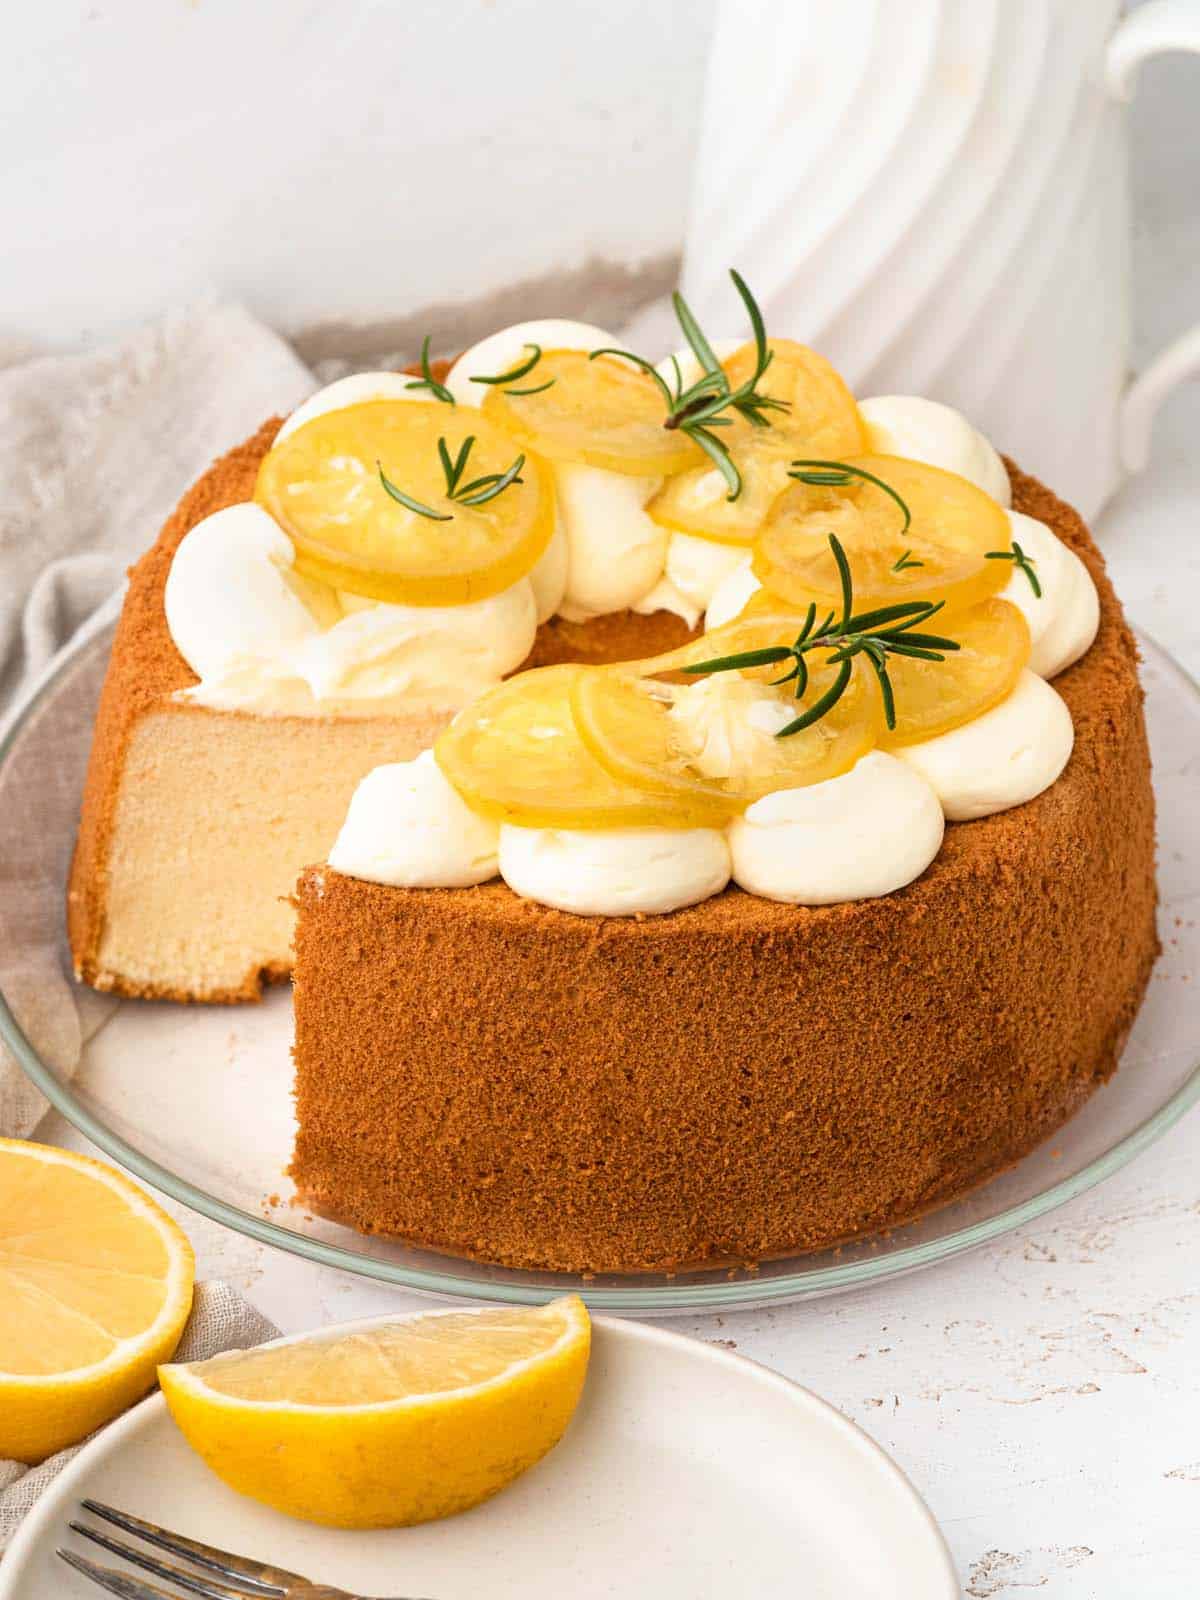 Lemon chiffon sponge cake with whipped cream and candied lemons